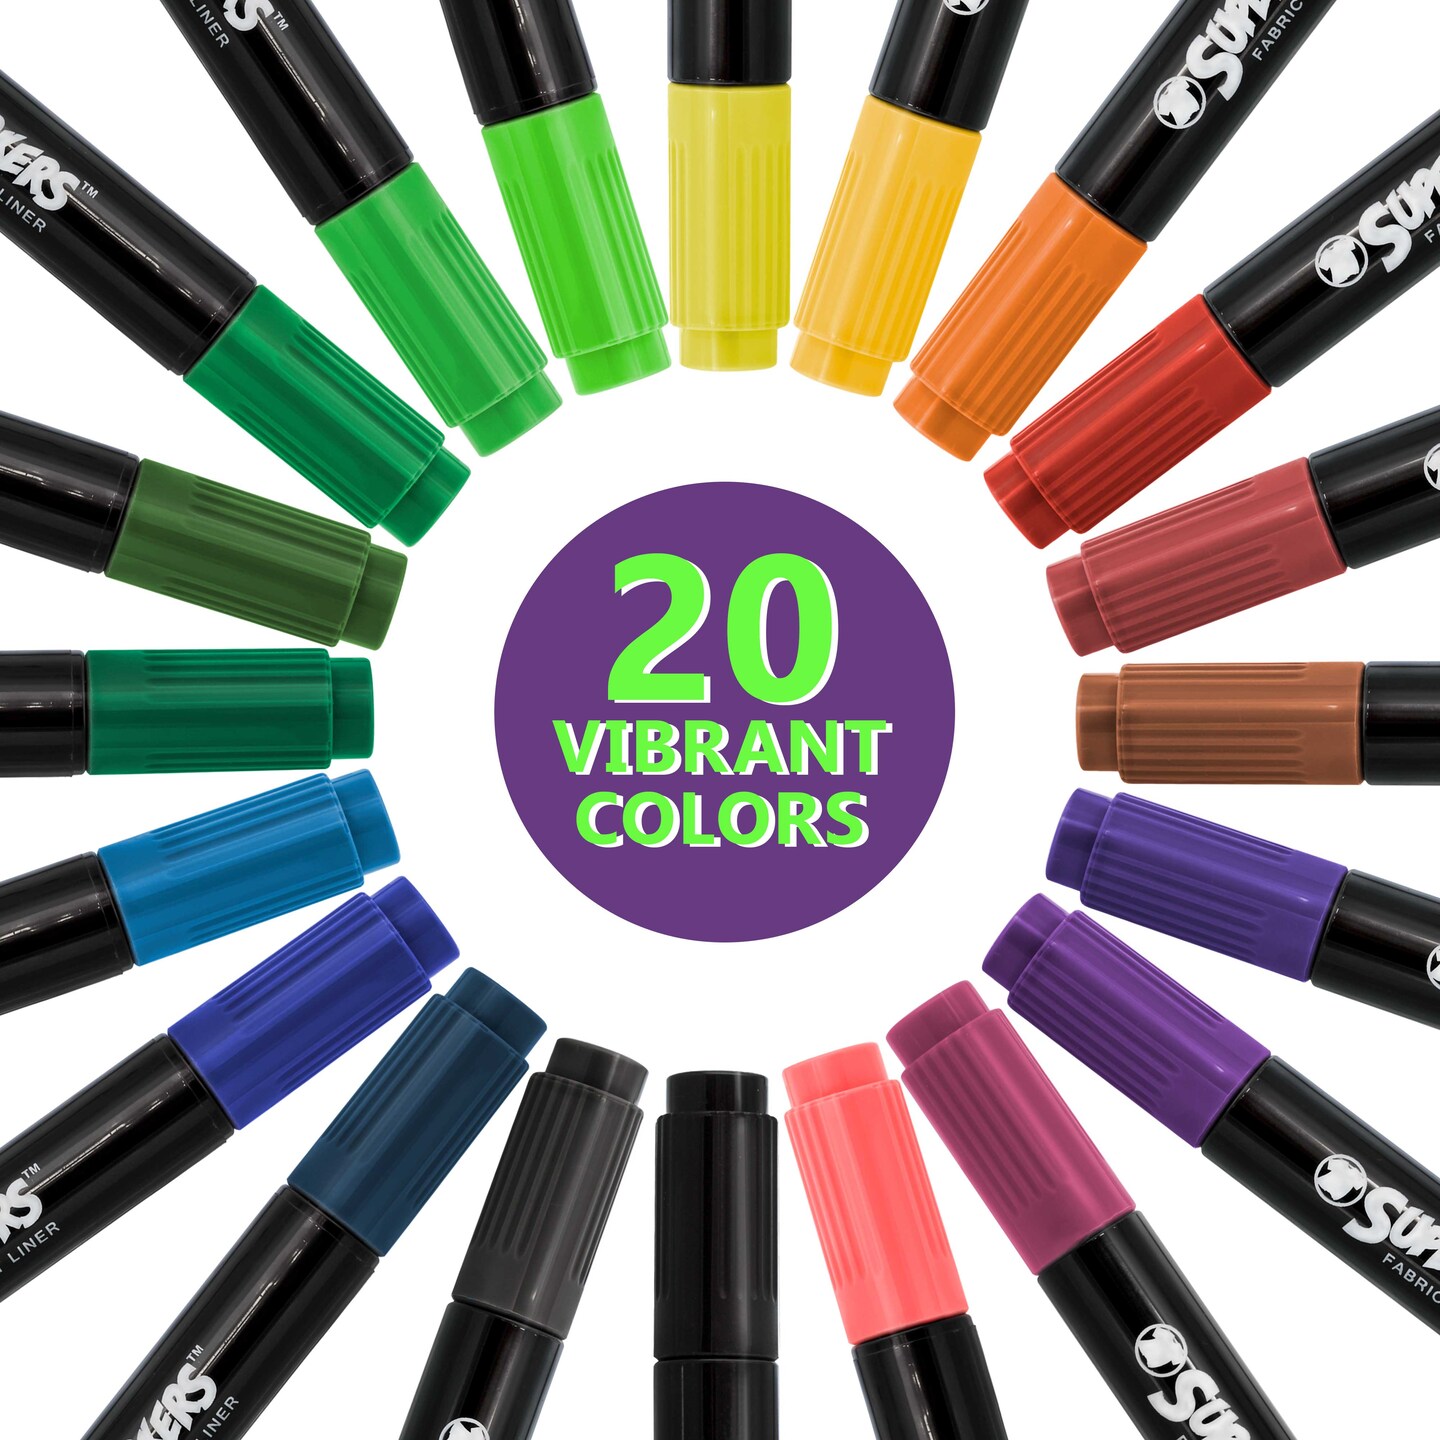 Arteza Dual Tip Fabric Markers Art Supply Set - 30 Colors